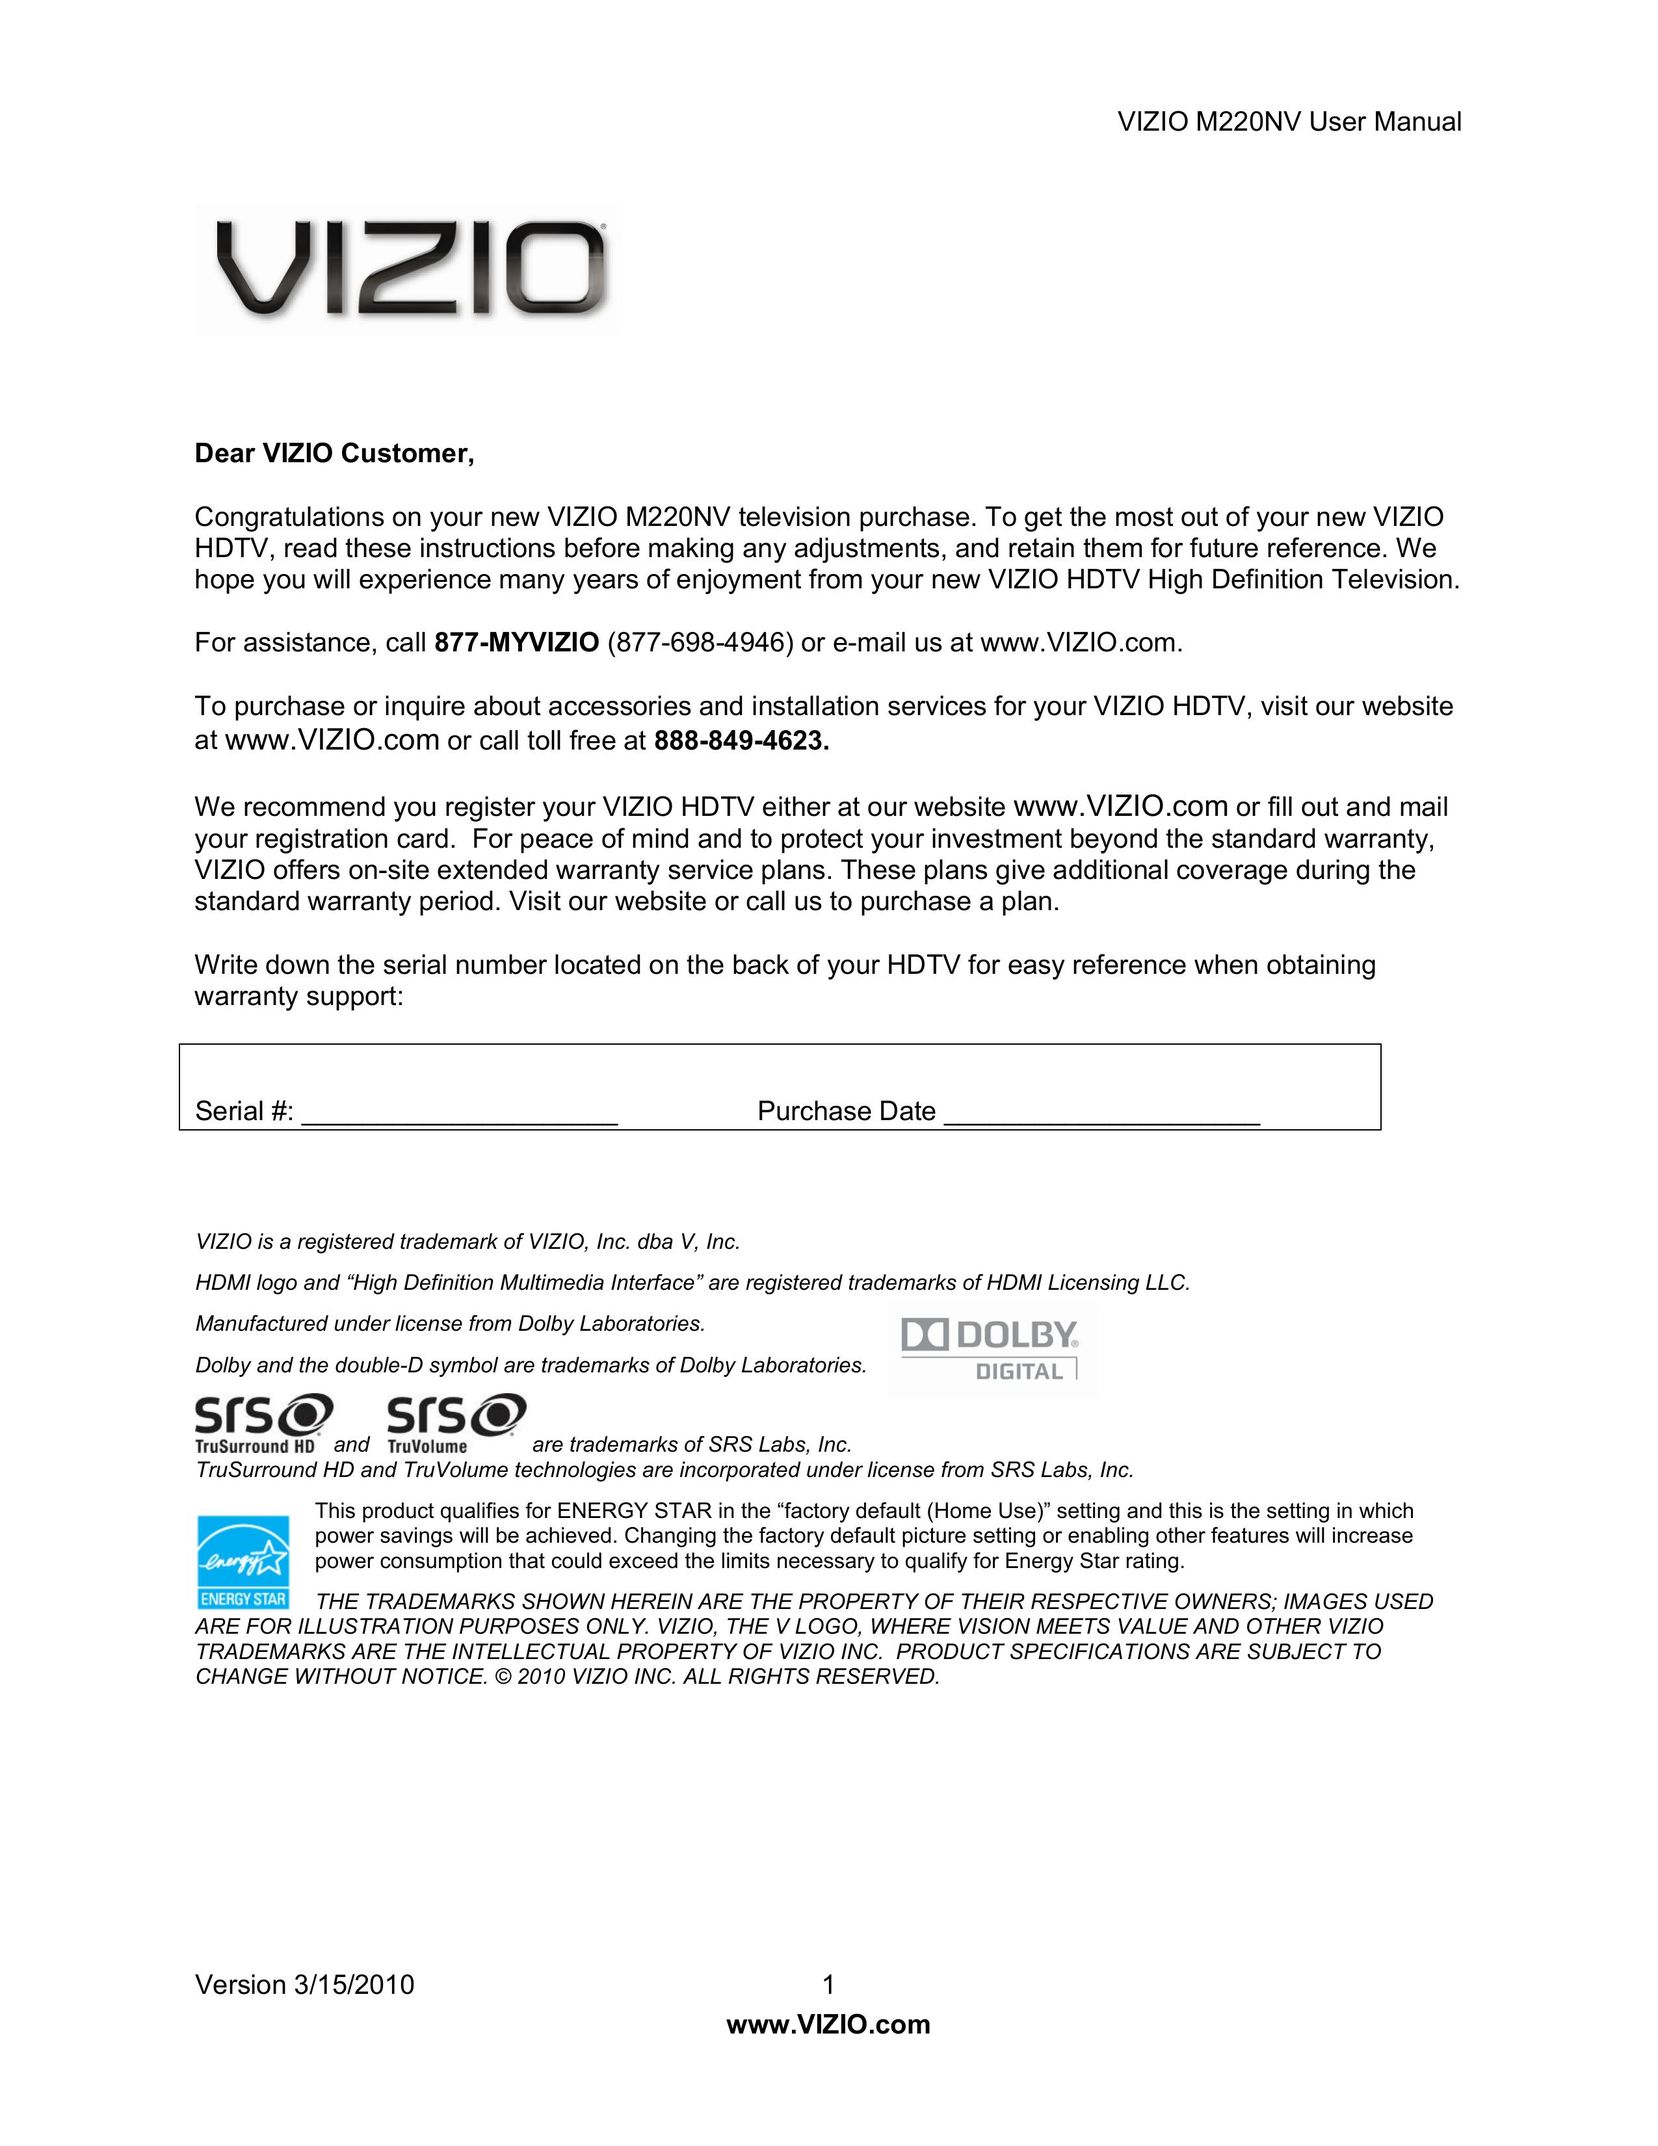 Vizio M220NV CRT Television User Manual